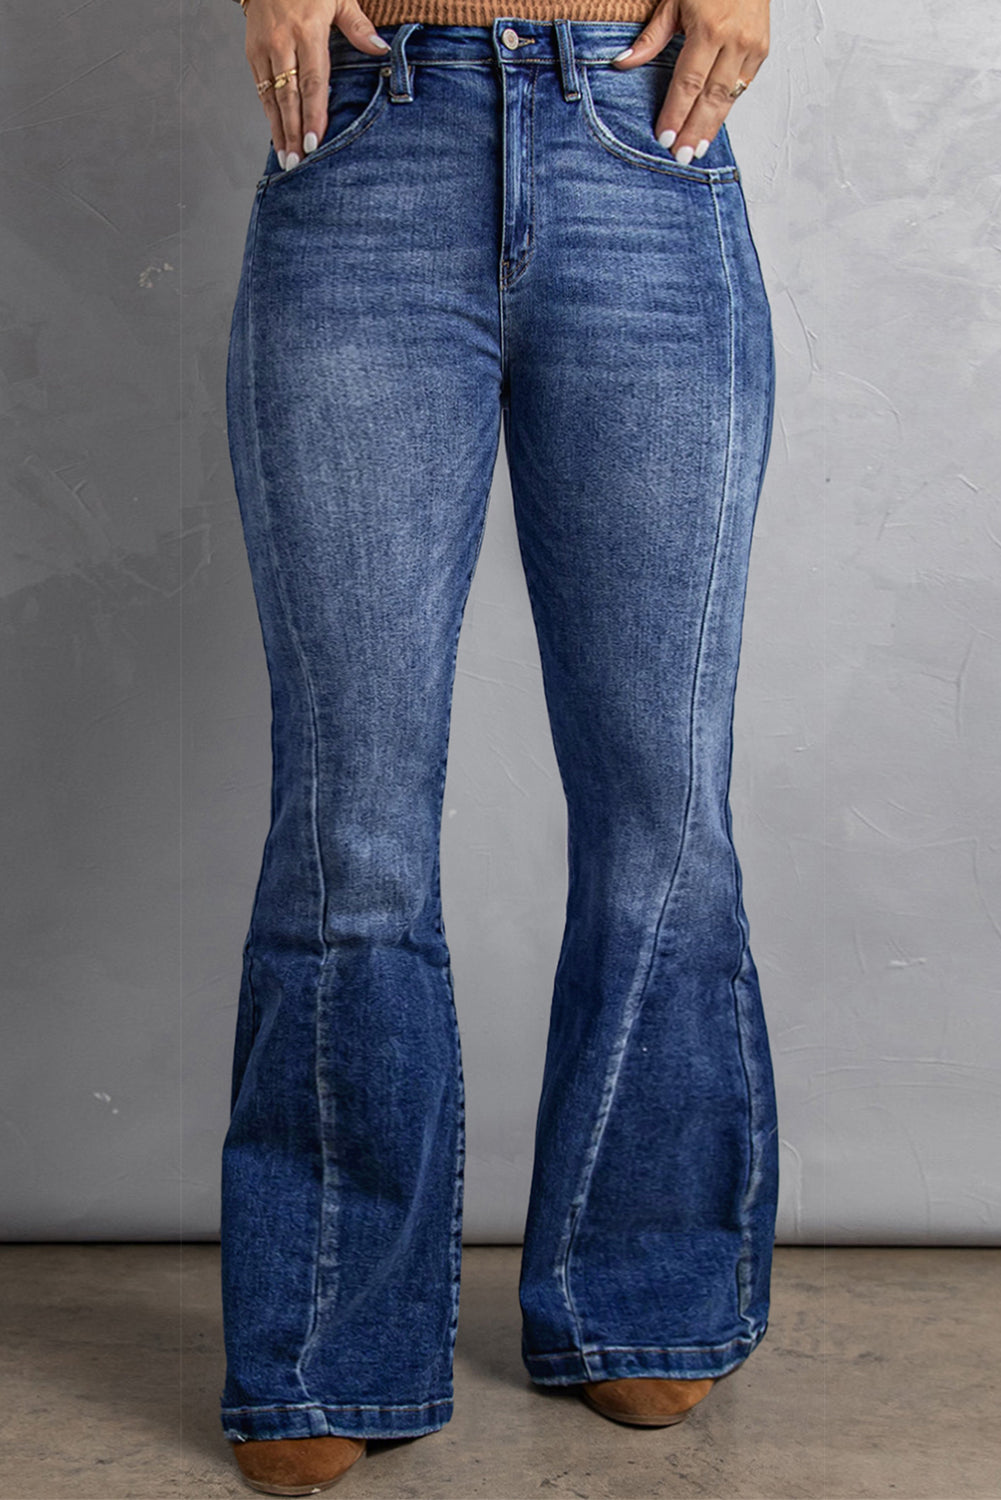 Dark blue plus size stitching washed flare jeans - 1x 71% cotton + 27.5% polyester + 1.5% elastane